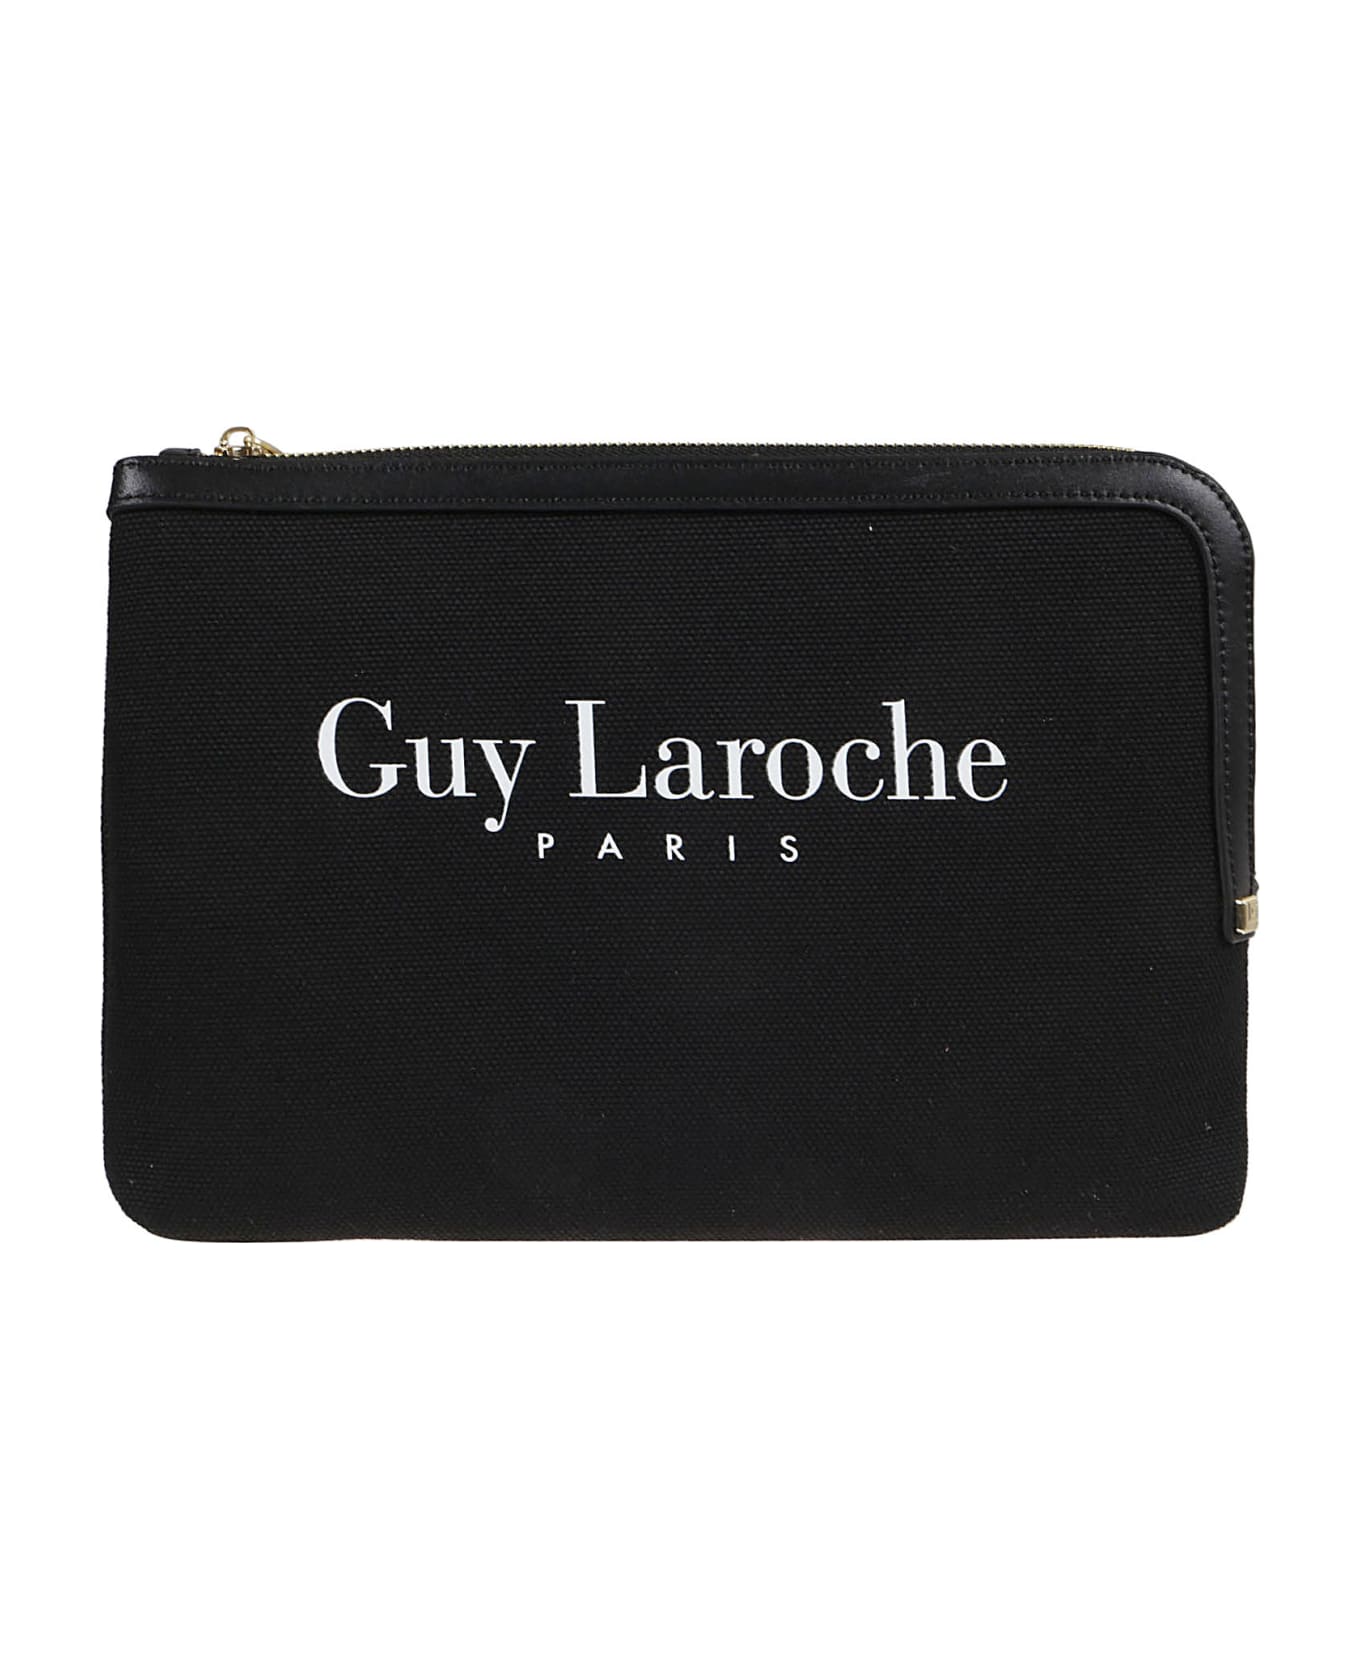 Guy Laroche Crossbody Bag - Nero クラッチバッグ